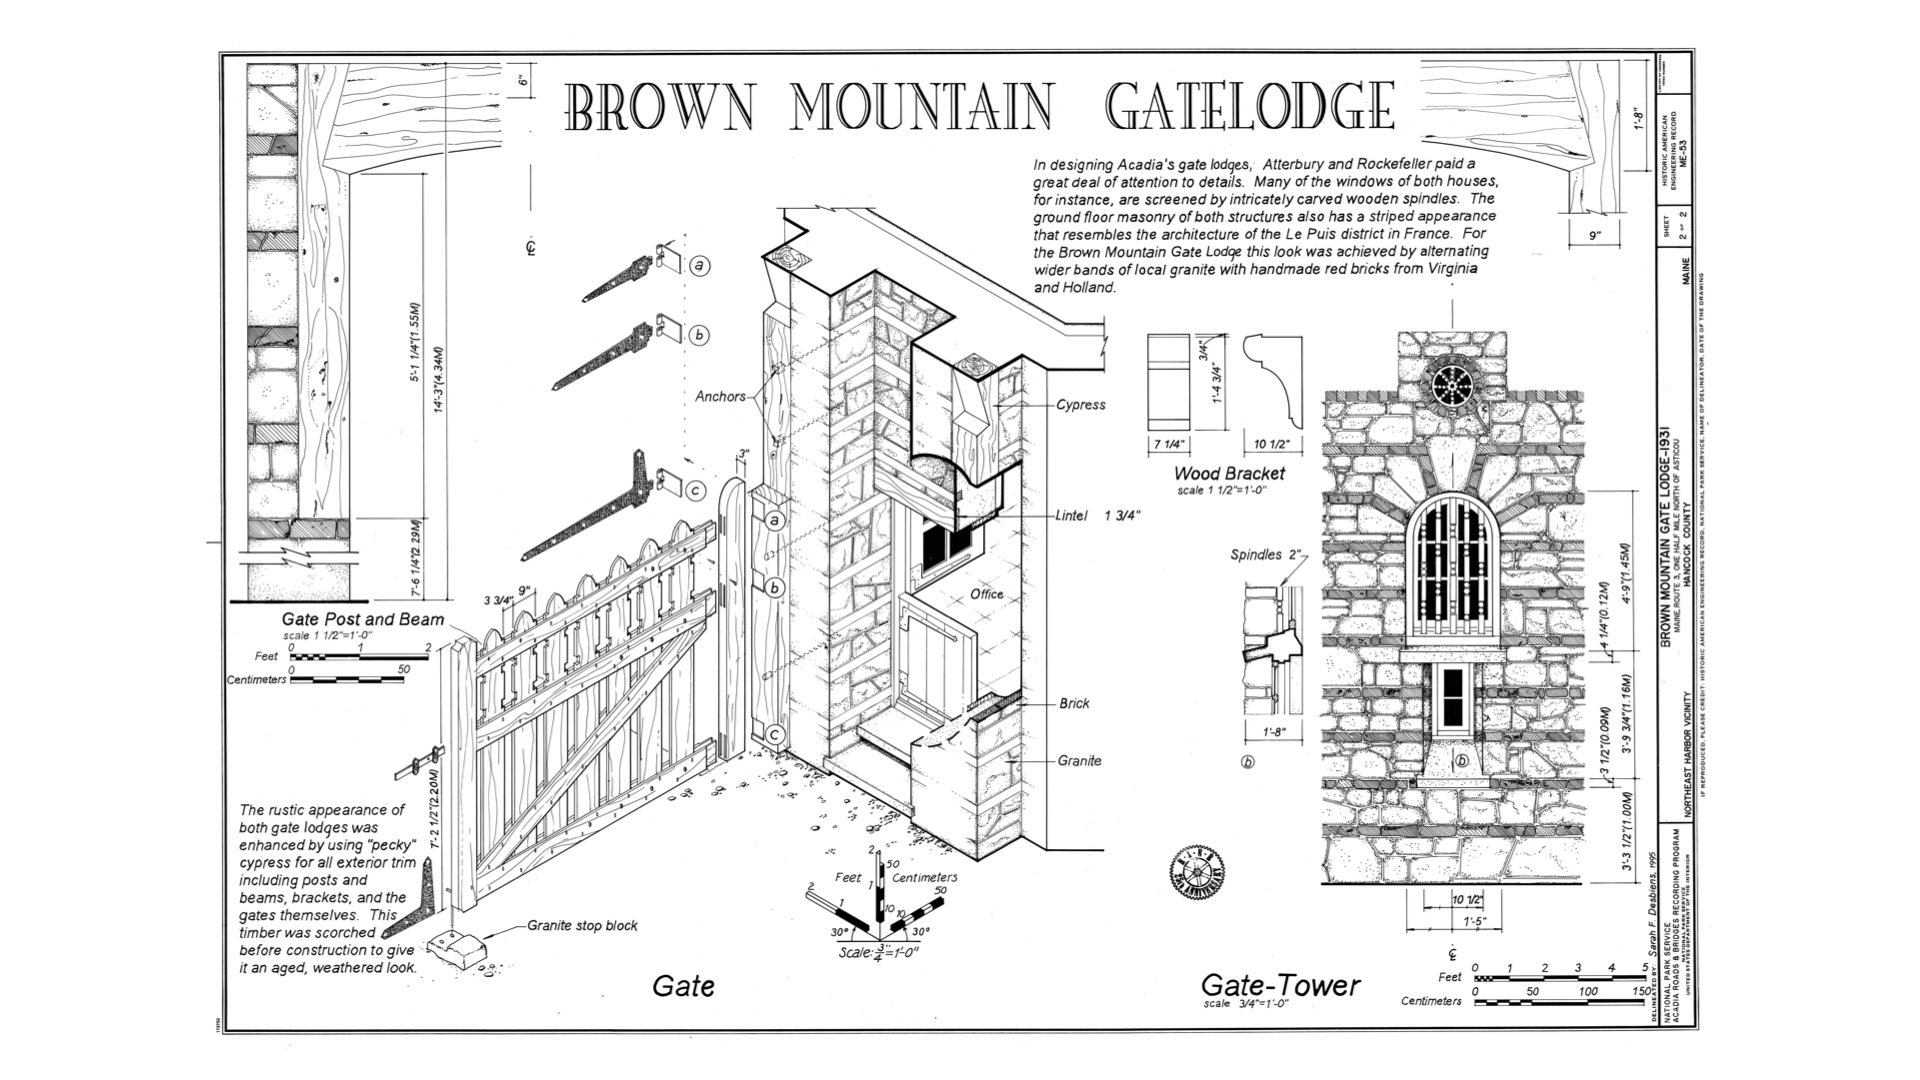 Brown Mtn. Gatelodge Details